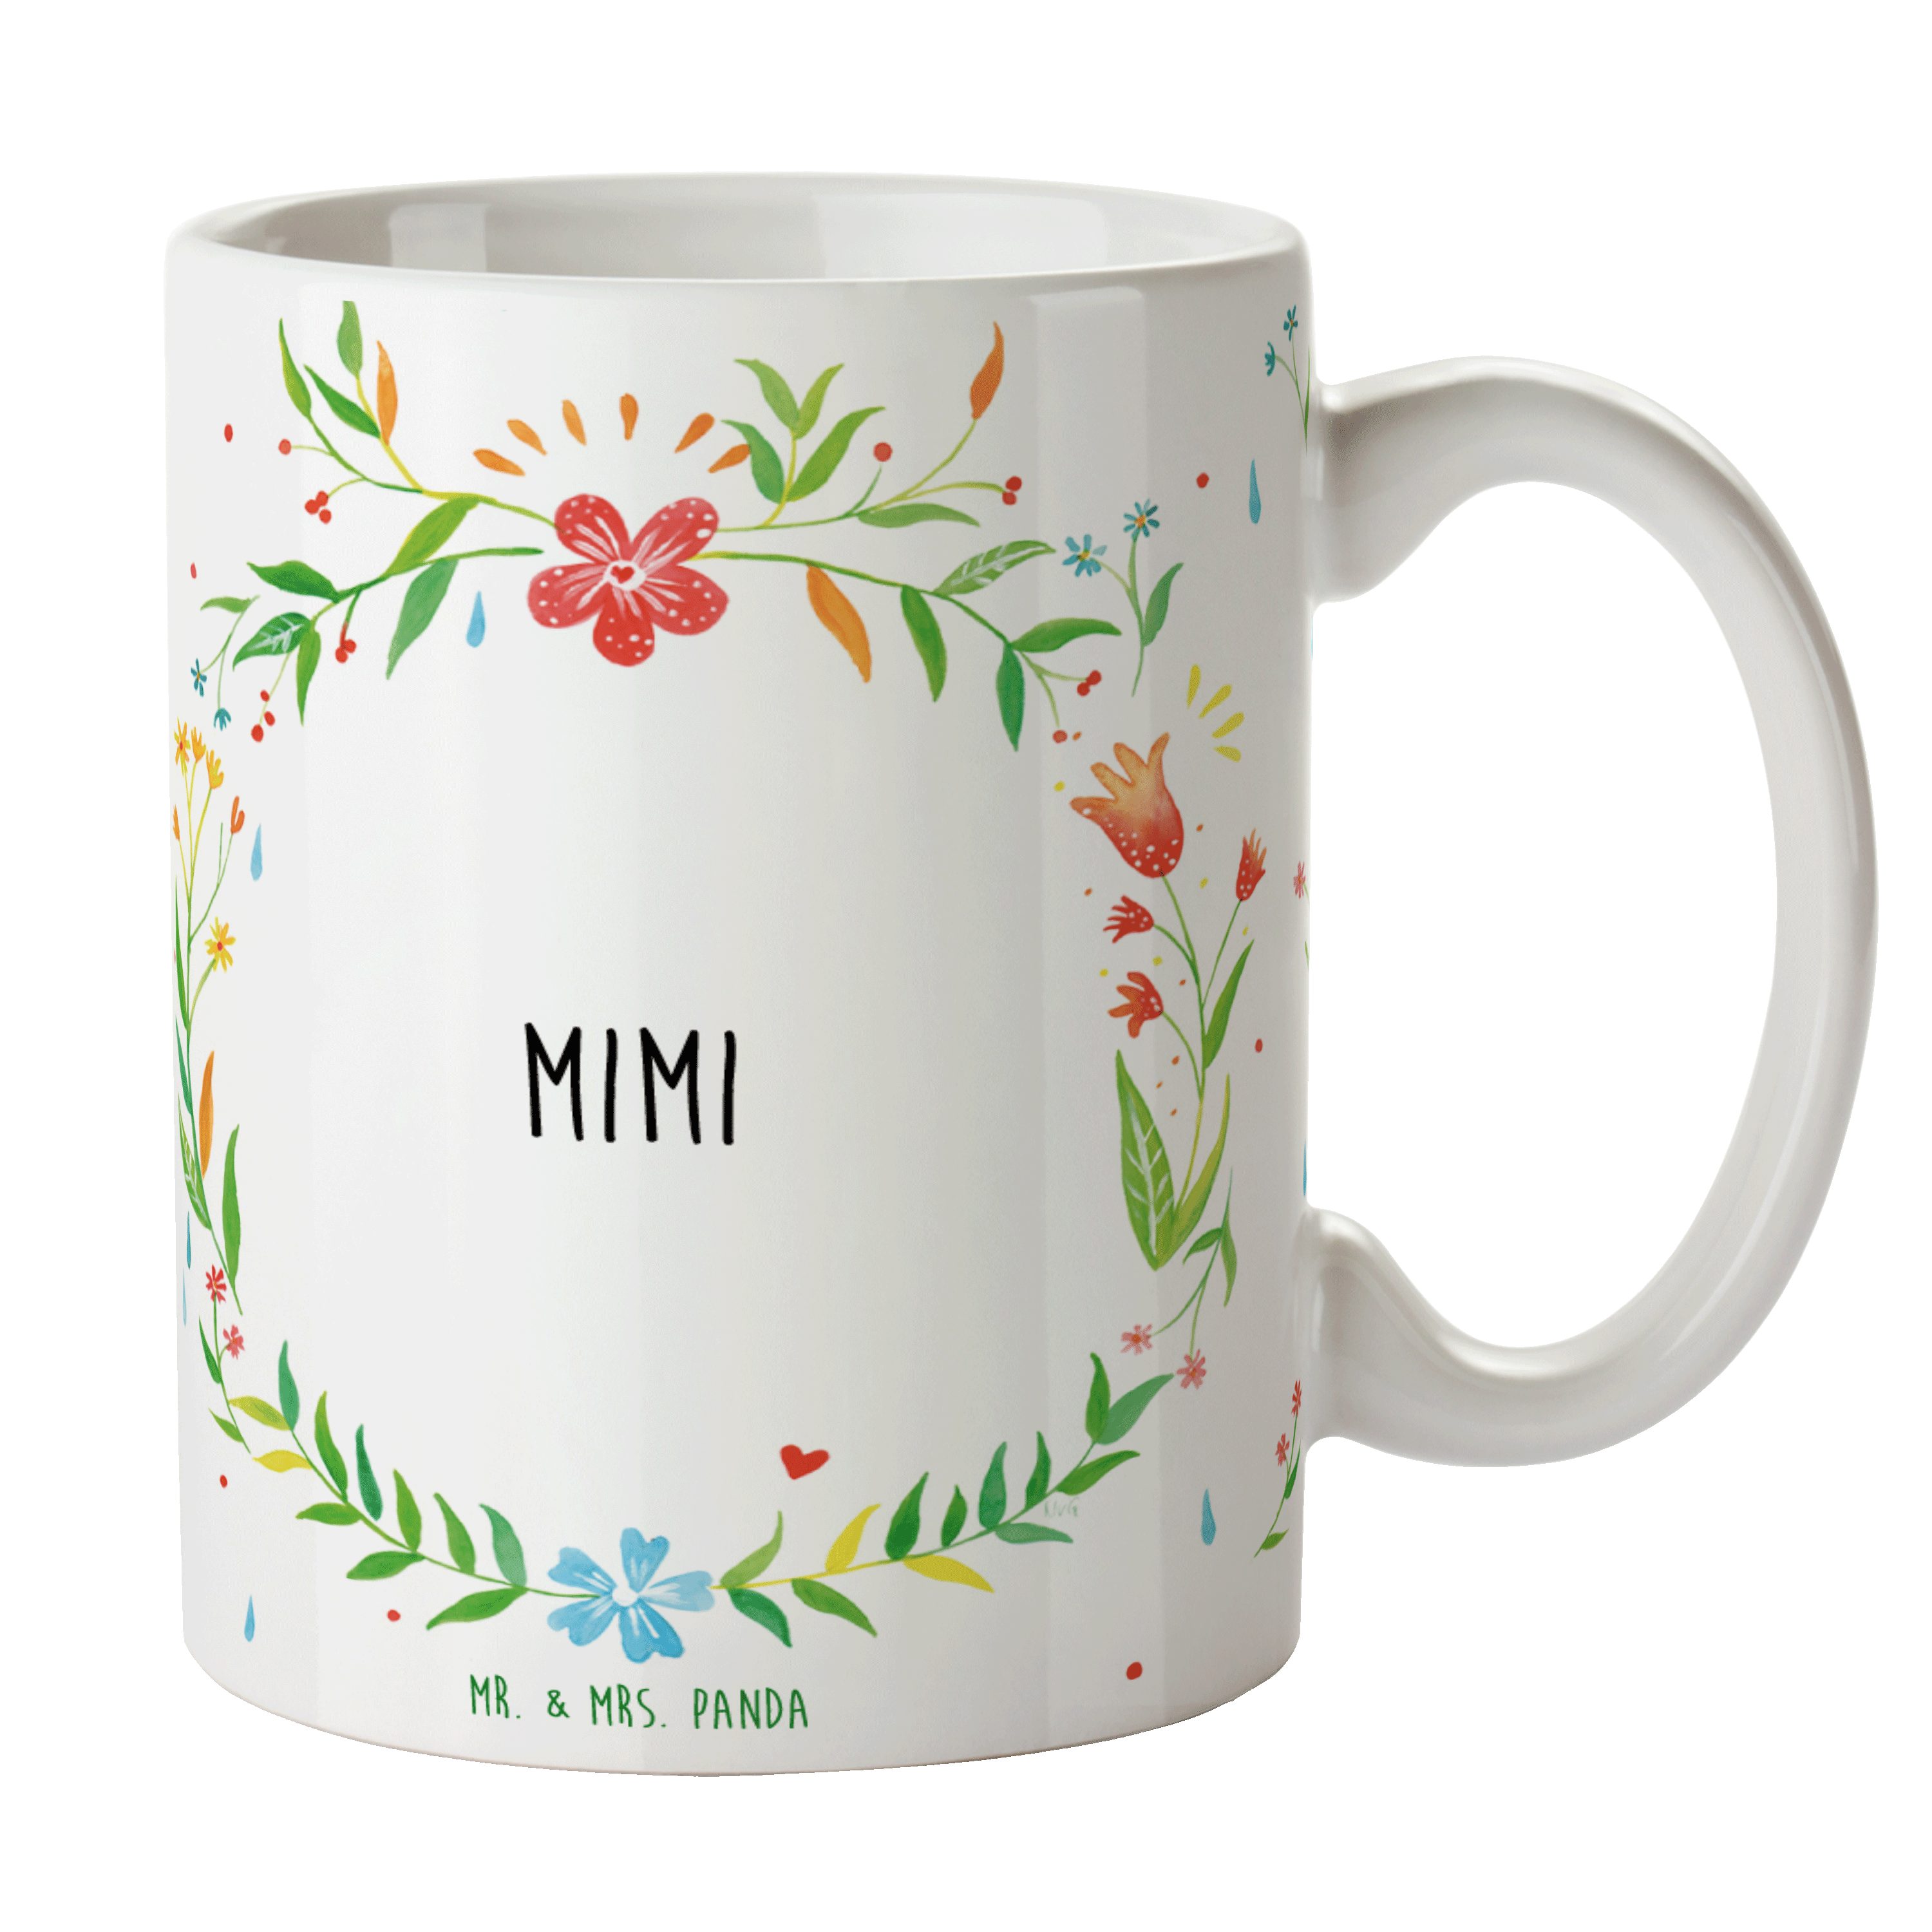 Mr. & Mrs. Panda Tasse Mimi - Geschenk, Geschenk Tasse, Tasse, Tasse Motive, Porzellantasse, Keramik